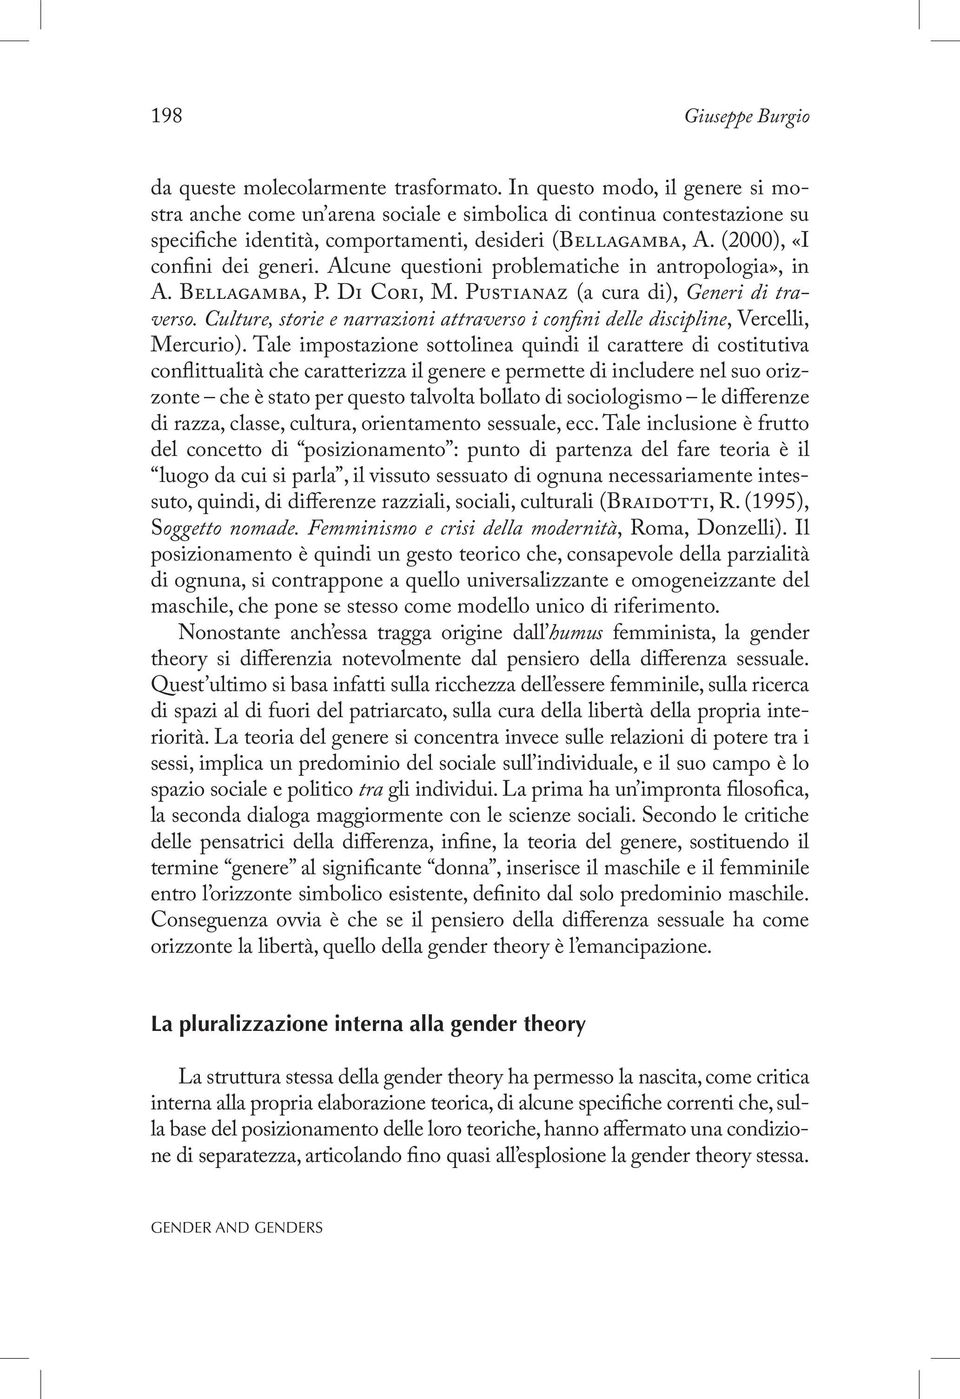 Alcune questioni problematiche in antropologia», in A. Bellagamba, P. Di Cori, M. Pustianaz (a cura di), Generi di traverso.